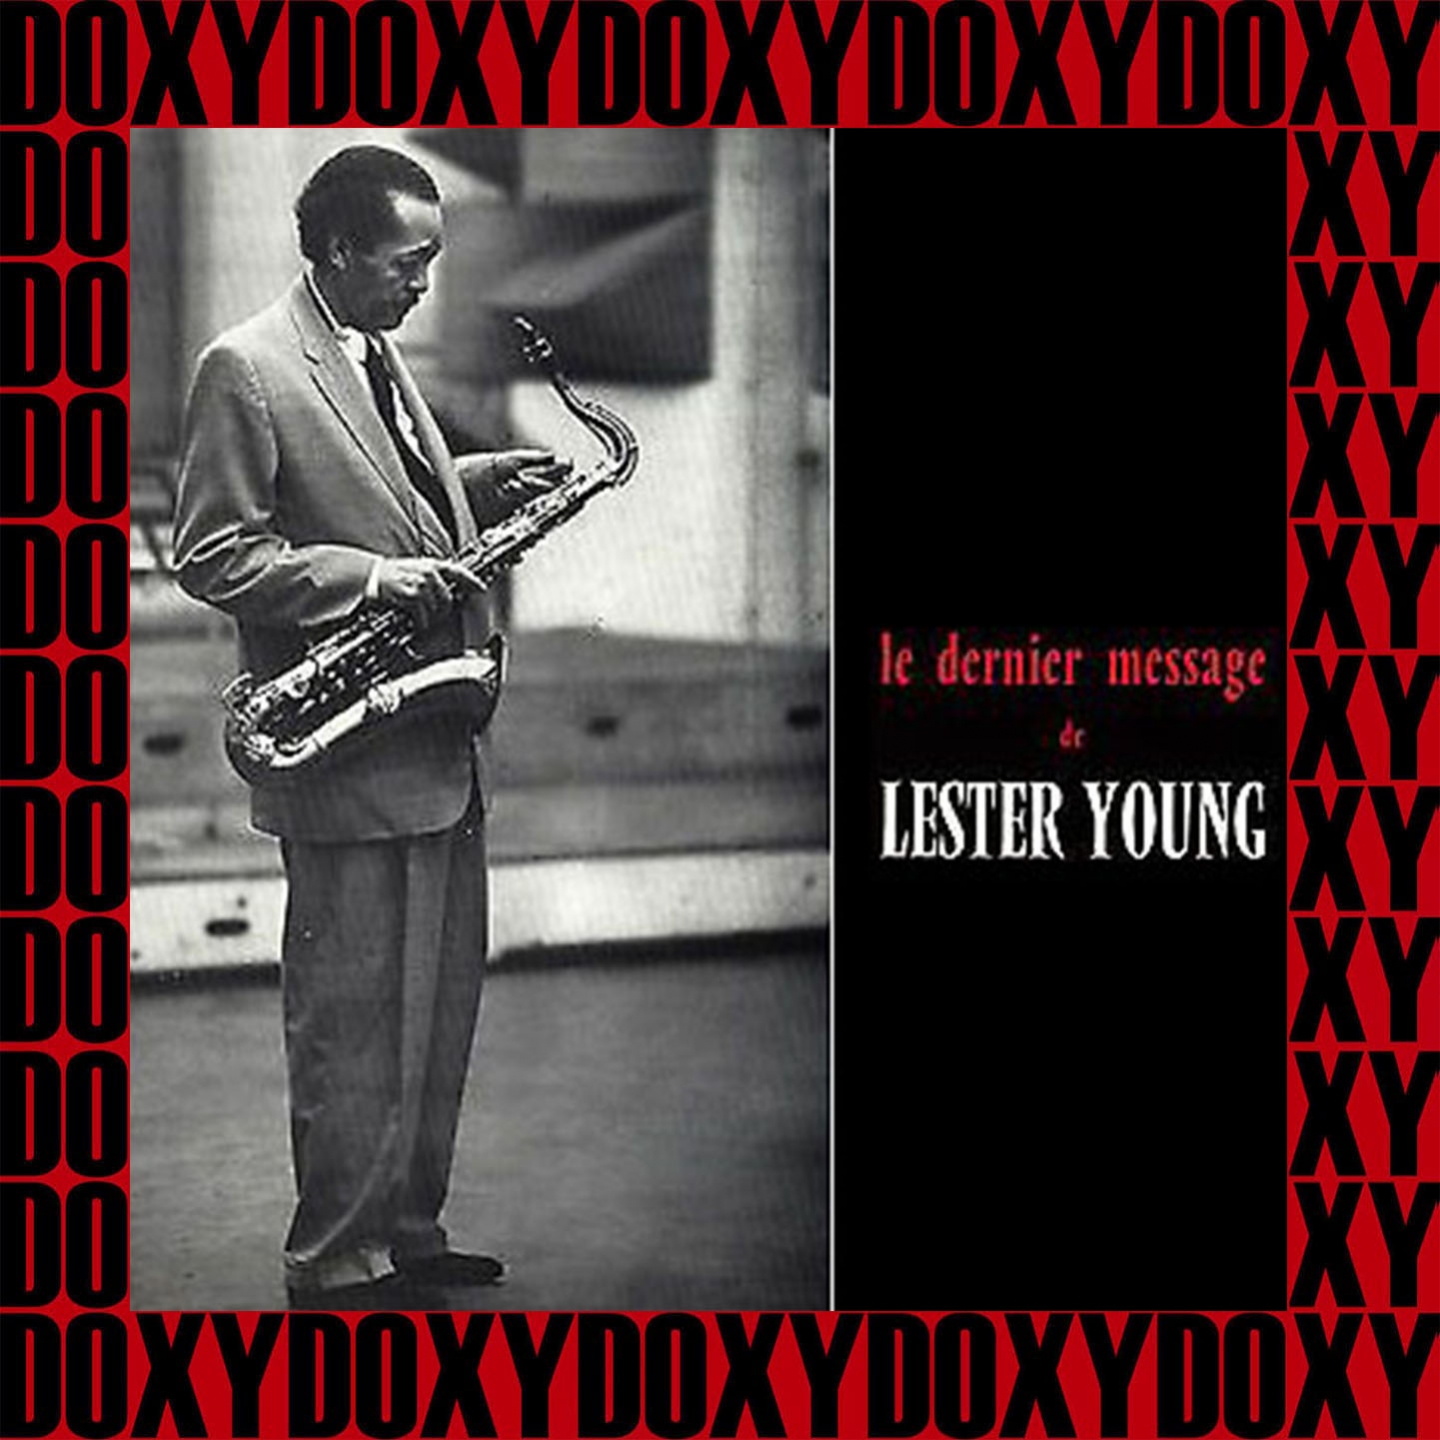 Le Dernier Message De Lester Young, His Last Recordings(Remastered Version) (Doxy Collection)